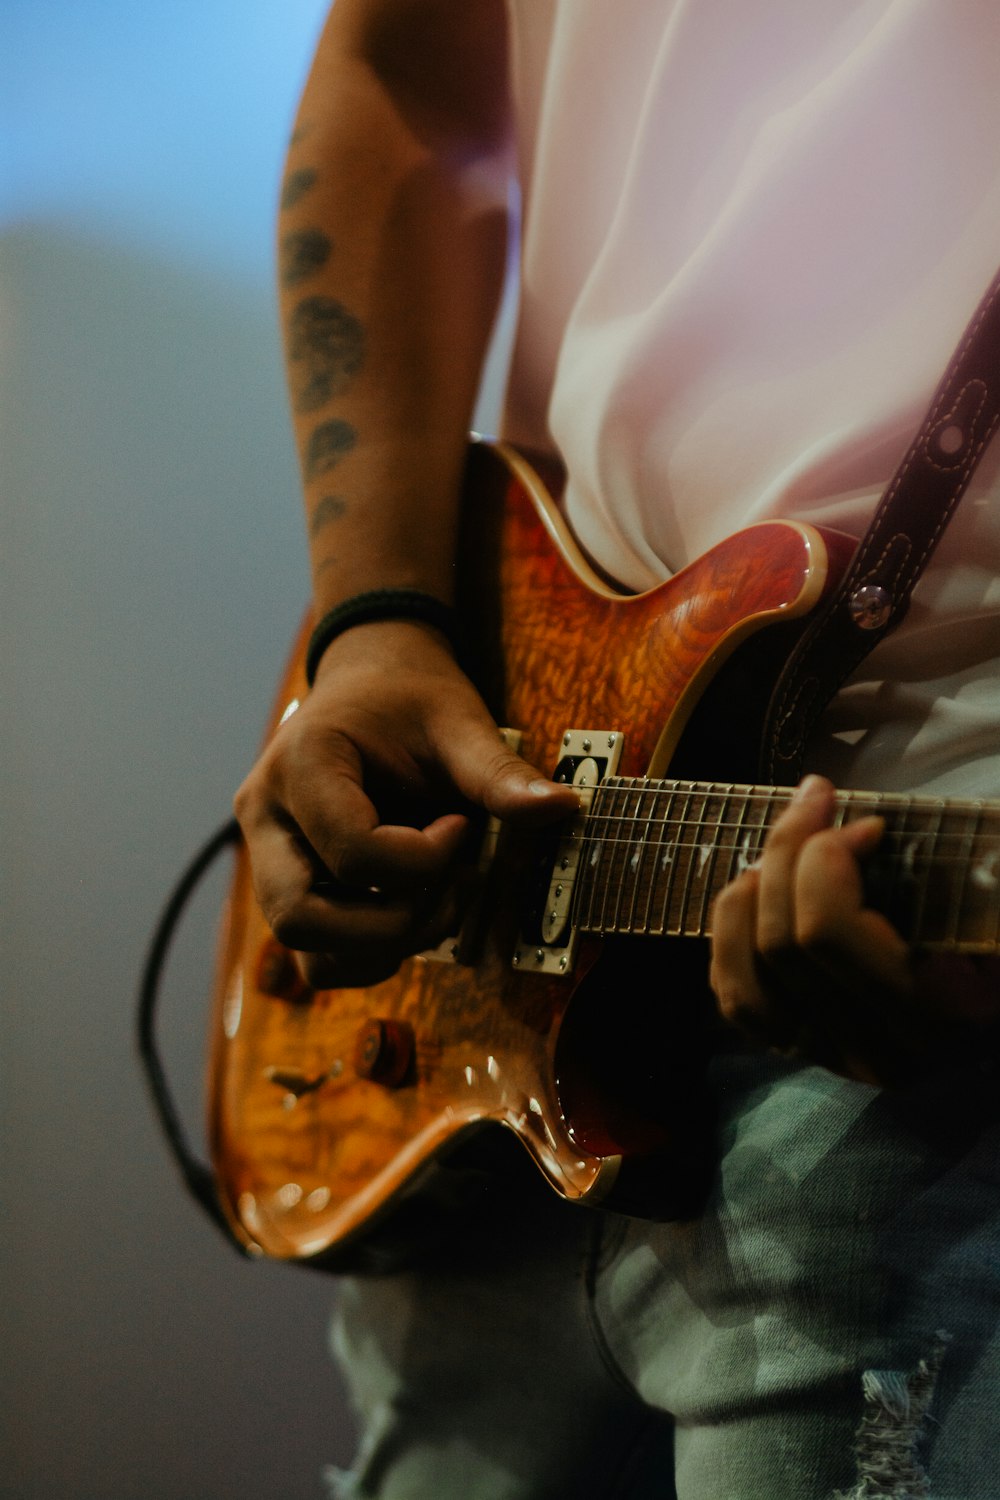 a man playing a guitar while wearing a white shirt